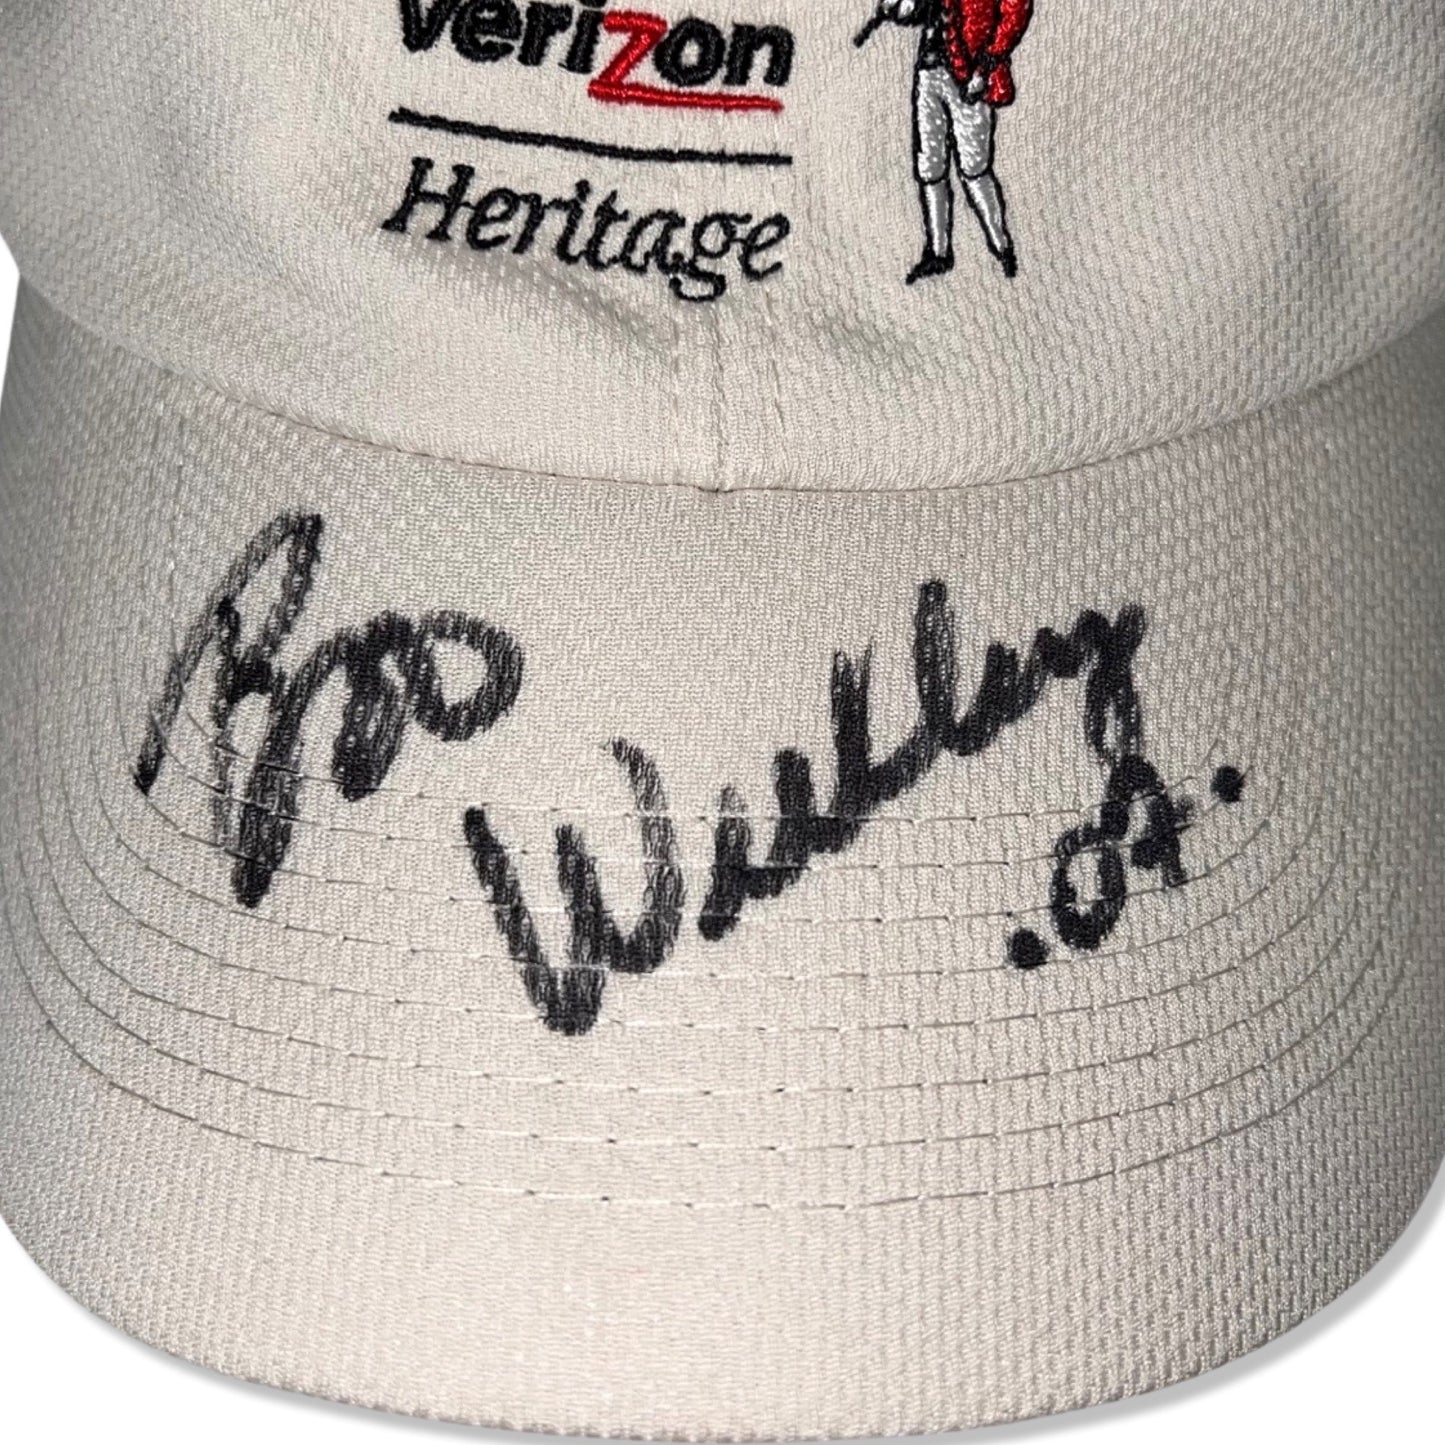 Verizon Heritage Hat - Signed by Boo Weekley 2007